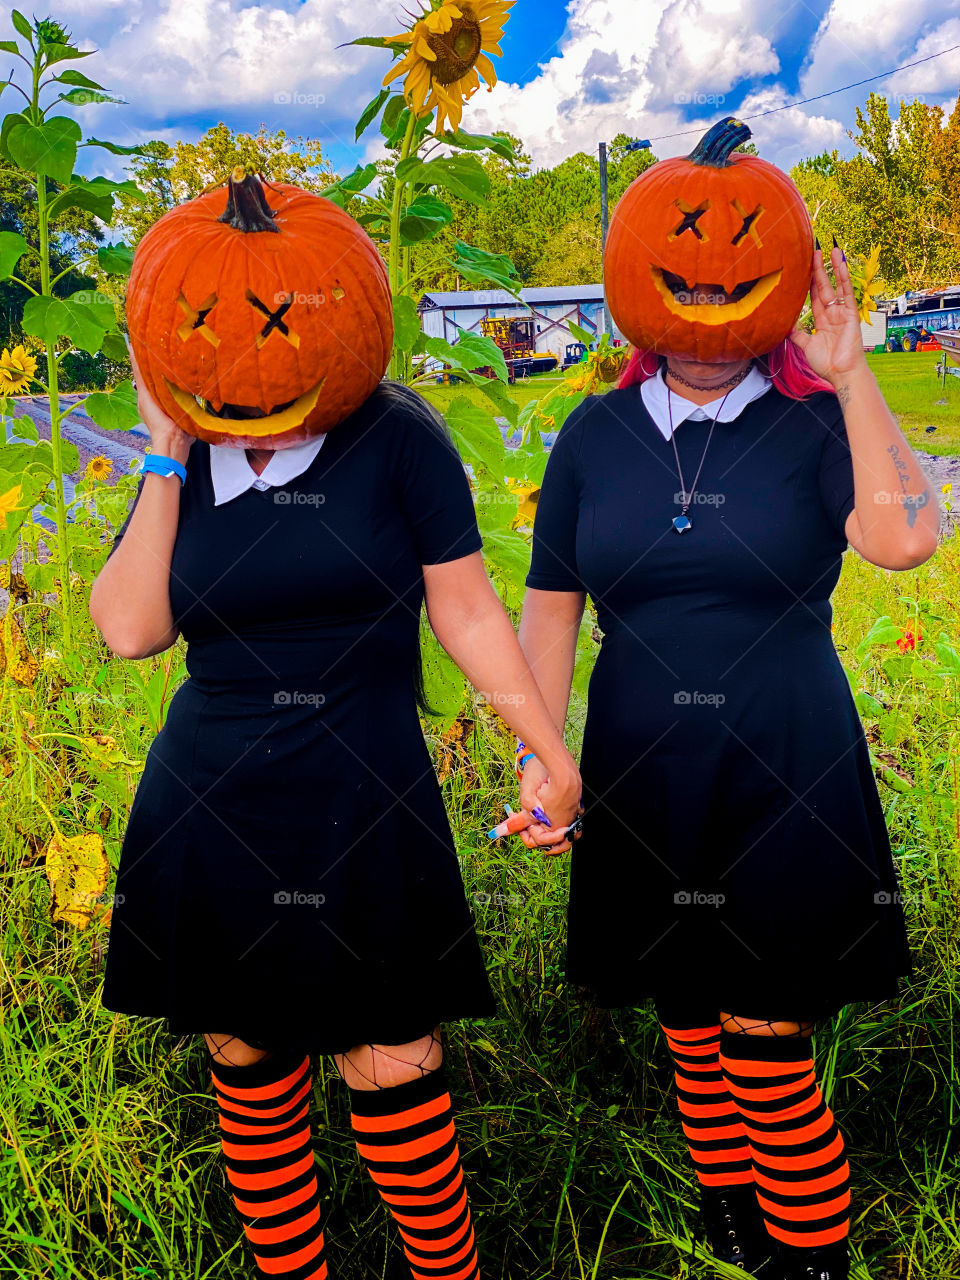 Pumpkin gals